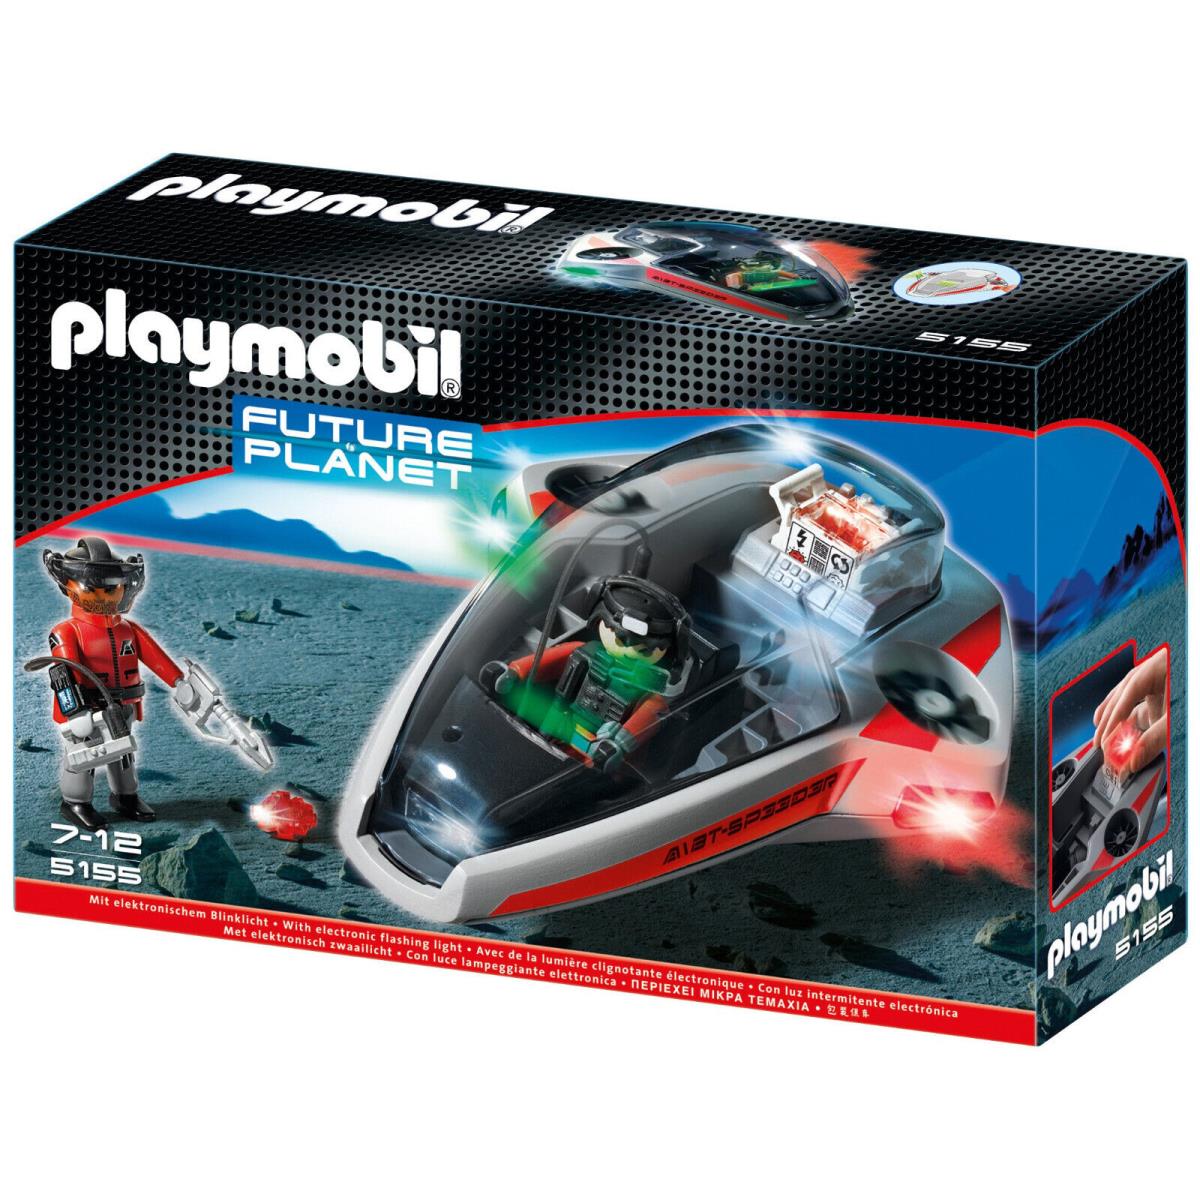 Playmobil 5155 Darkster Rangers Speed Glider Sci-fi Future Planet